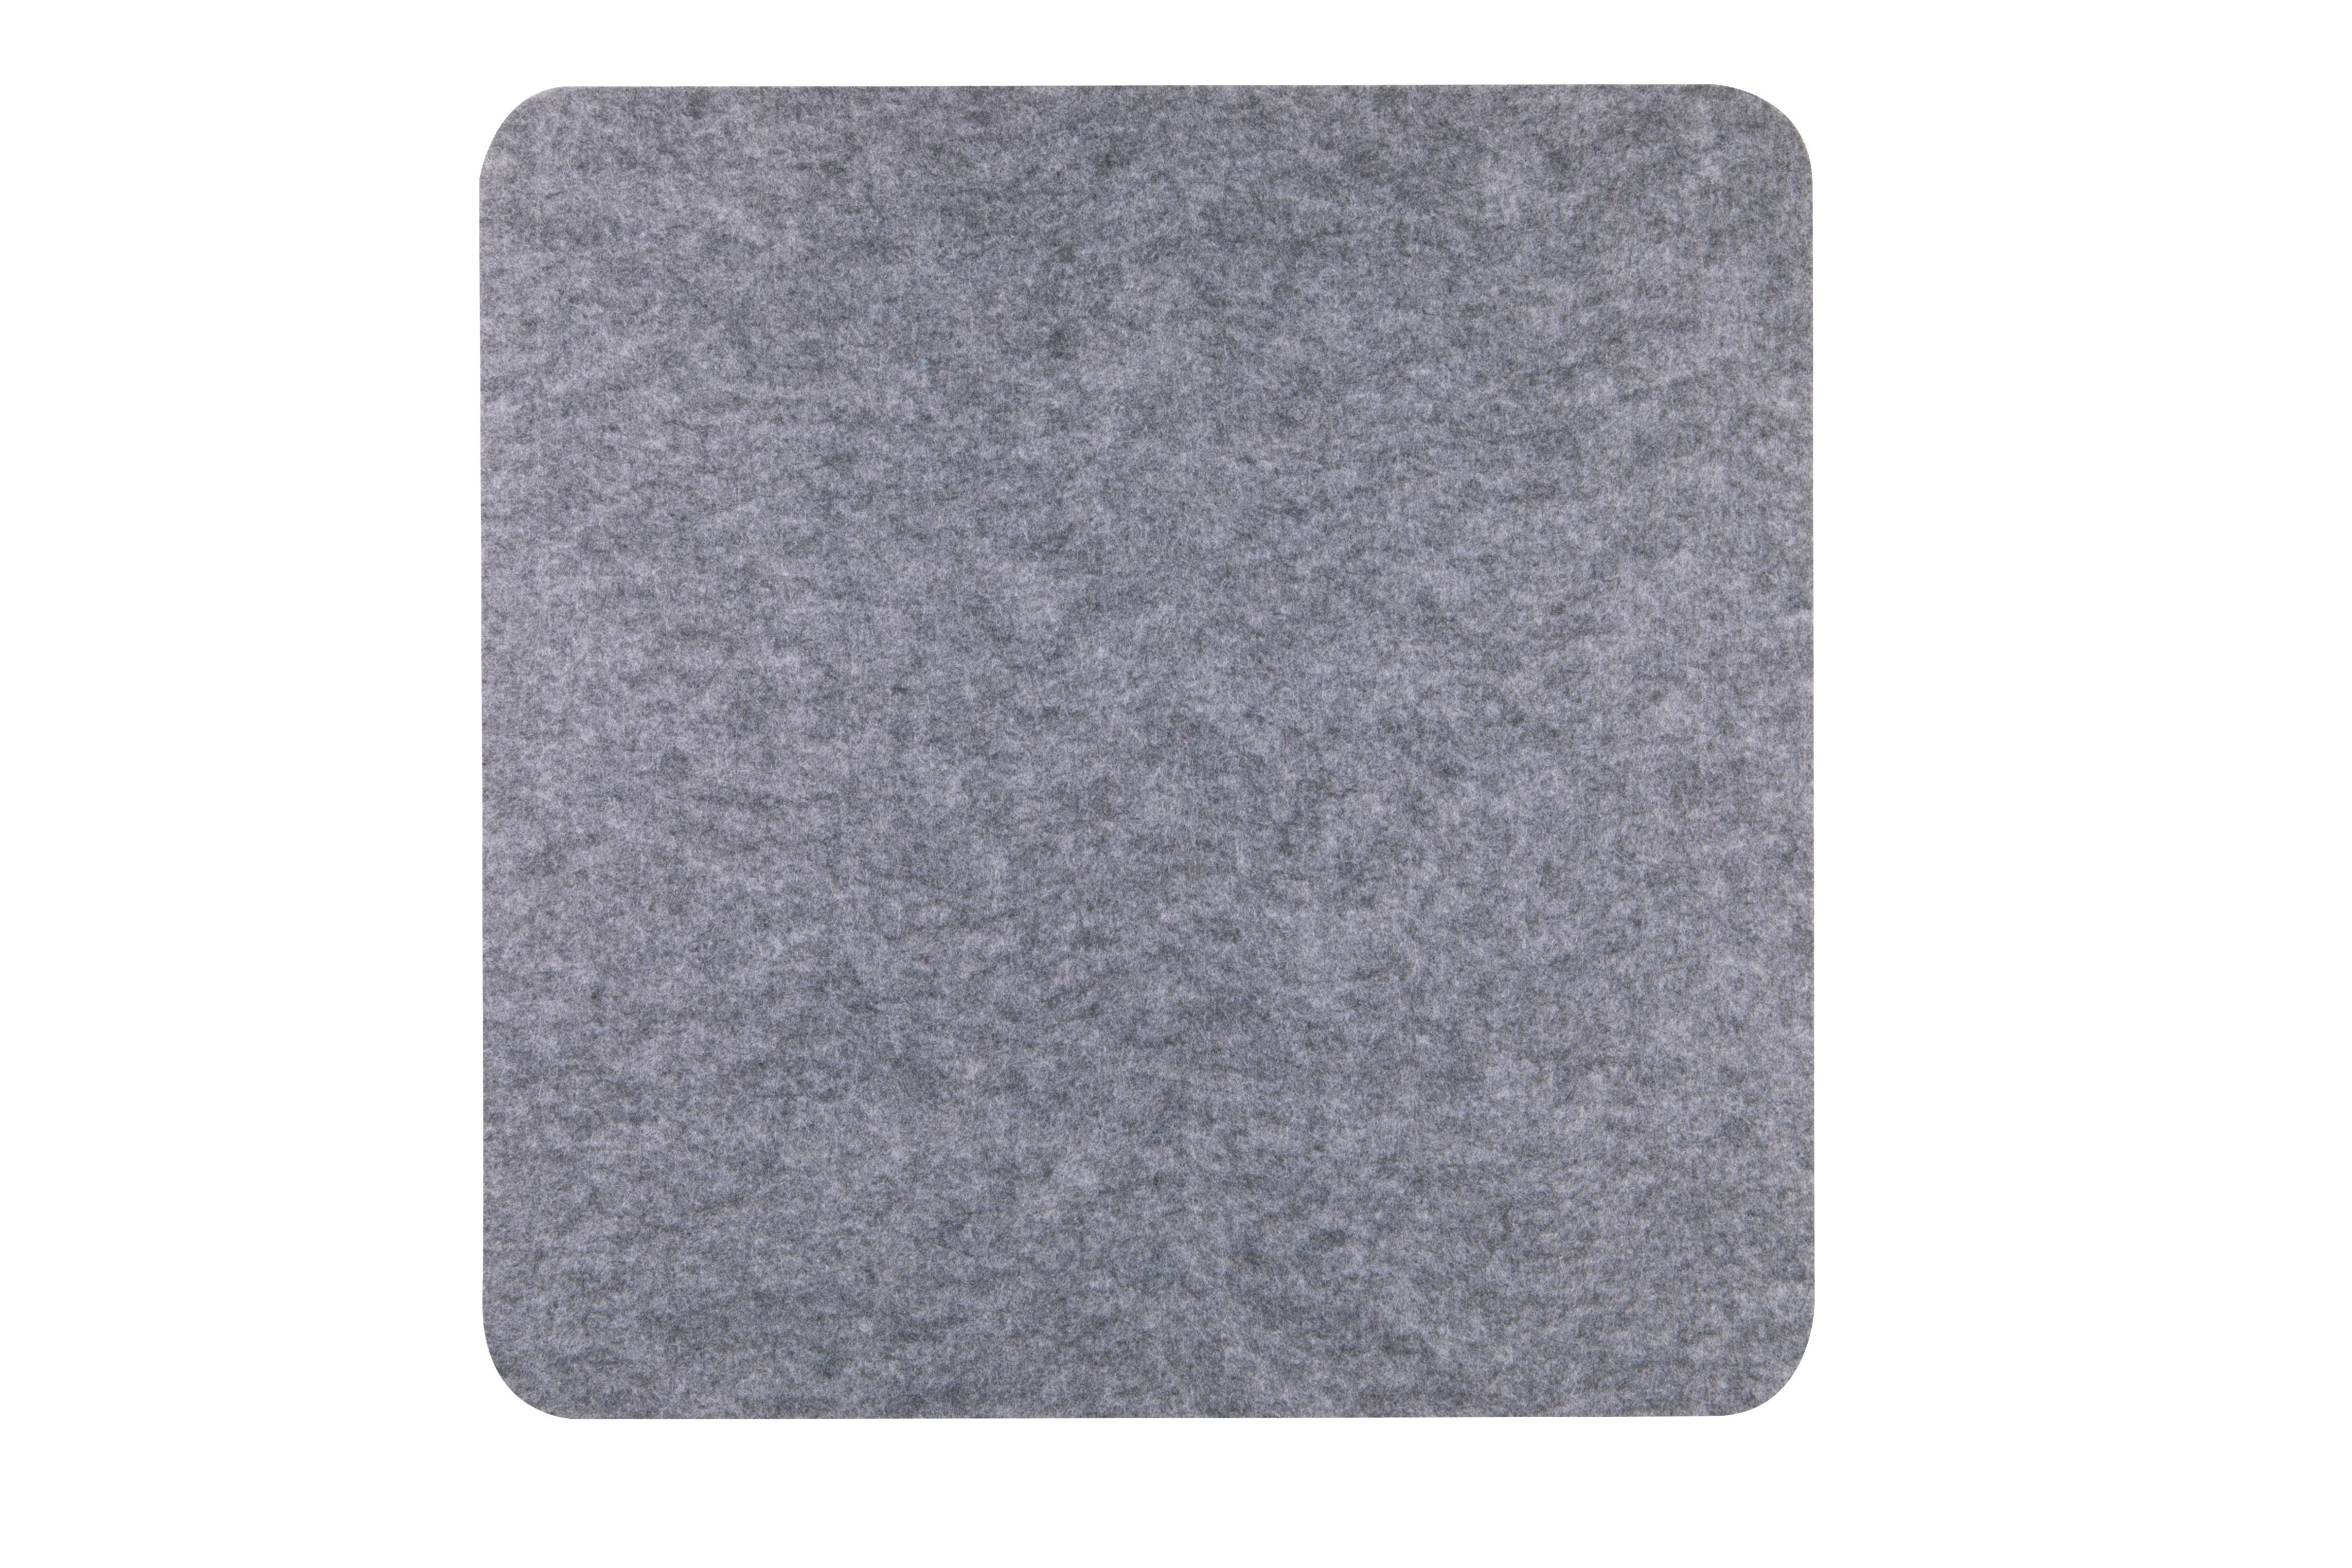 Lumeah  Sound Dampening Pinnable Tile Panel, 11.5"H x 11.5" W, 12 Pack Grey - image 1 of 5